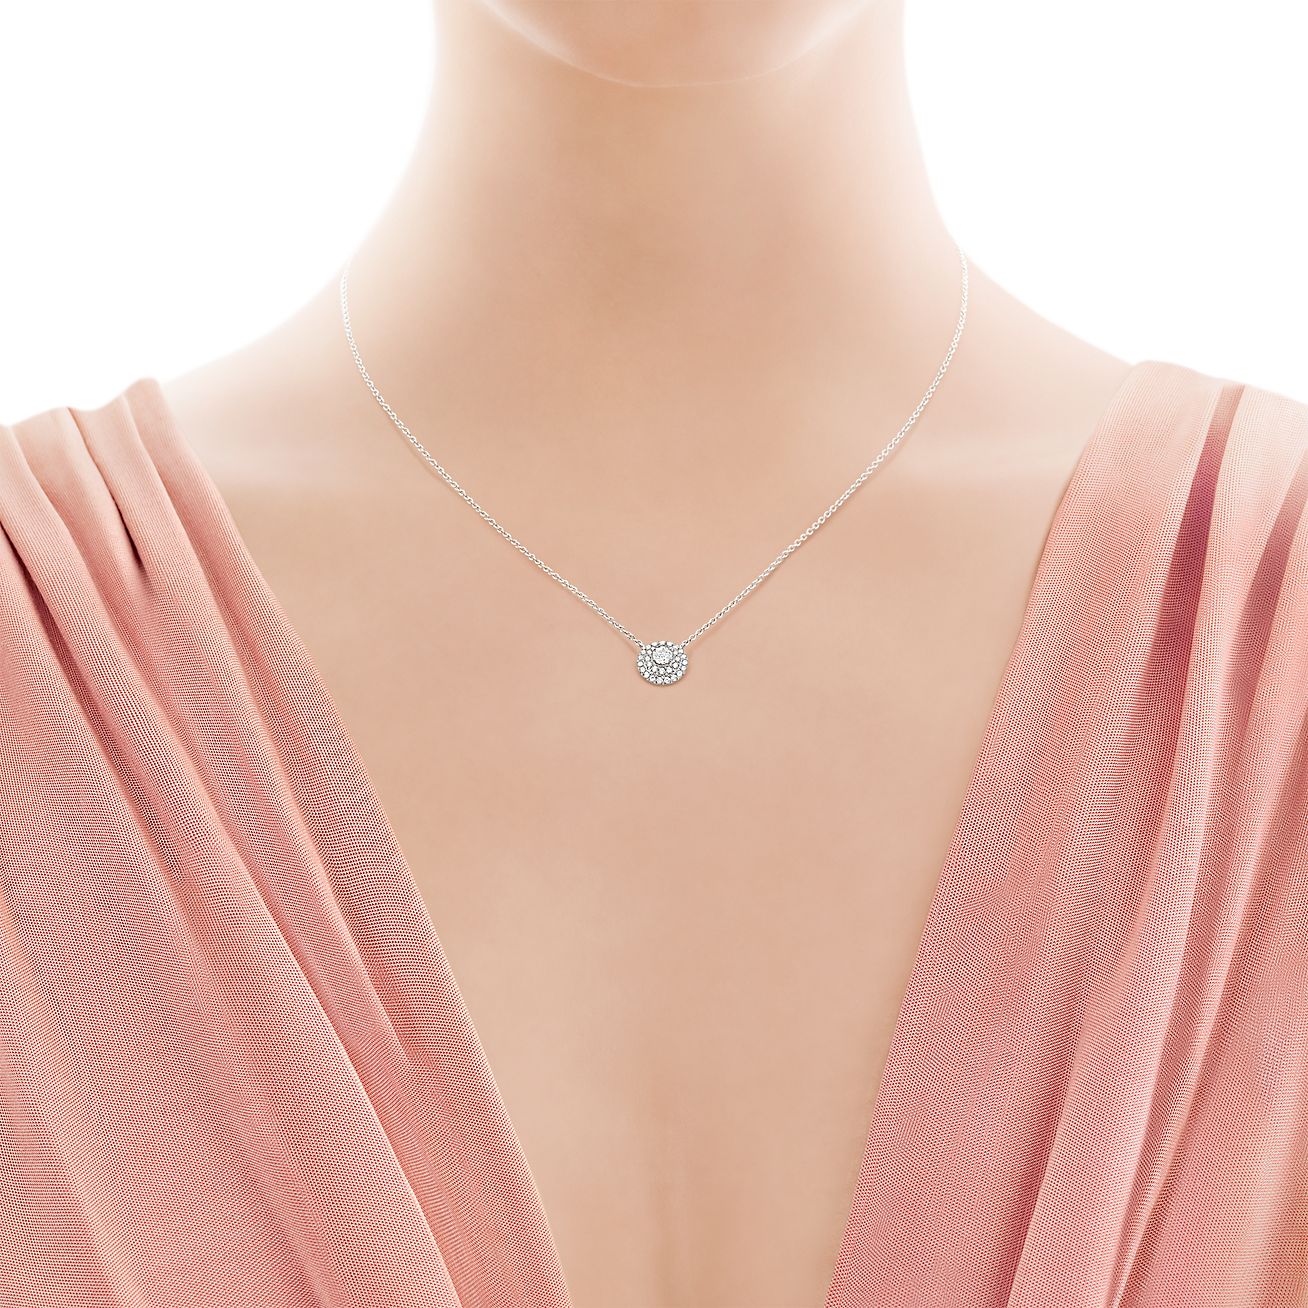 2 carat pendant necklace tiffany